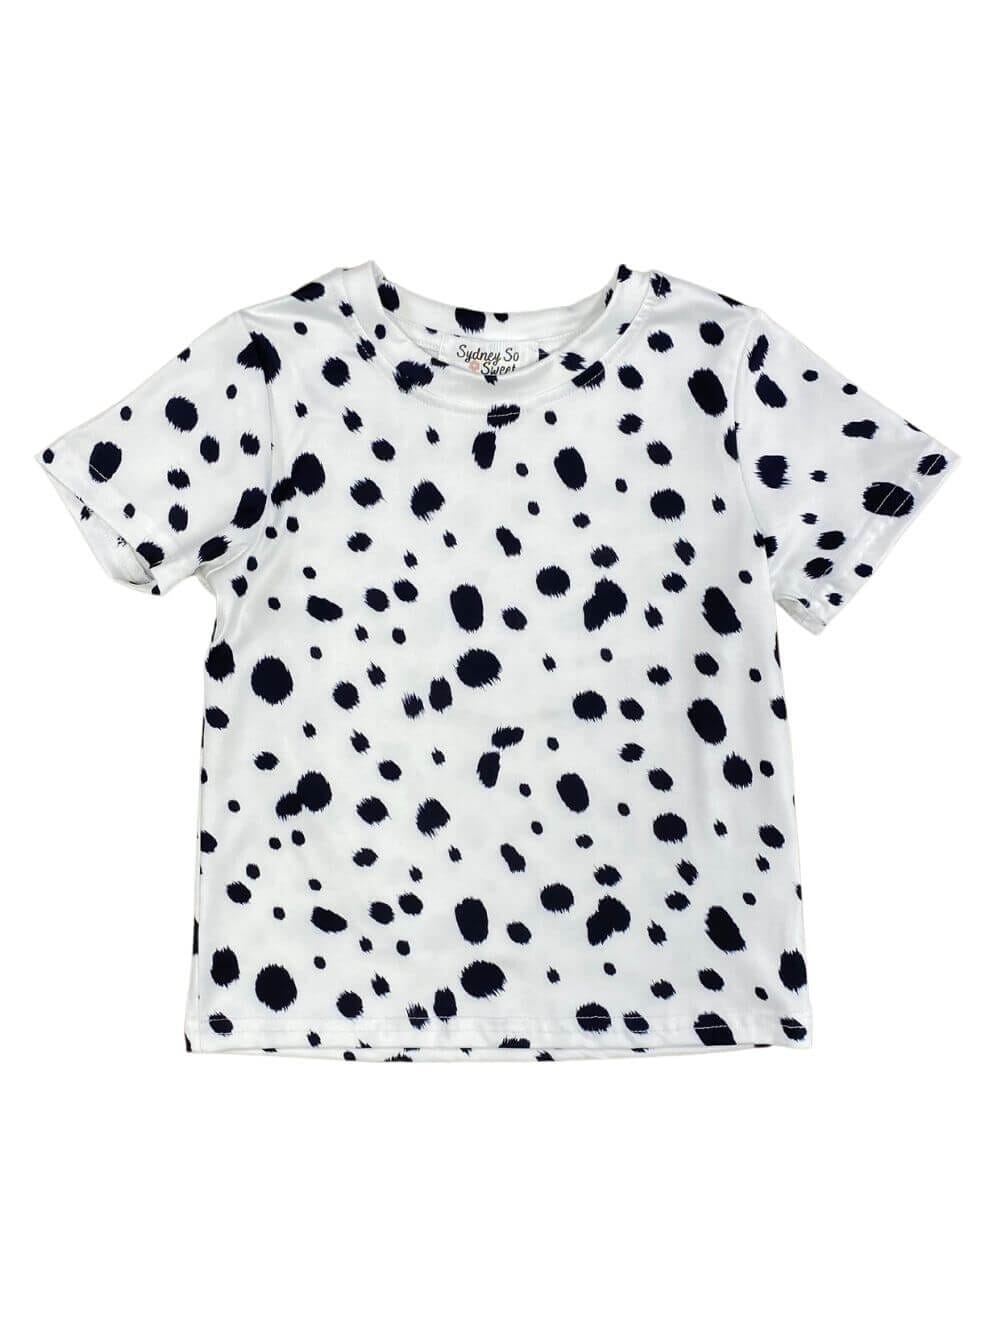 White & Black Dalmatian Costume T-Shirt for Boy or Girl 7